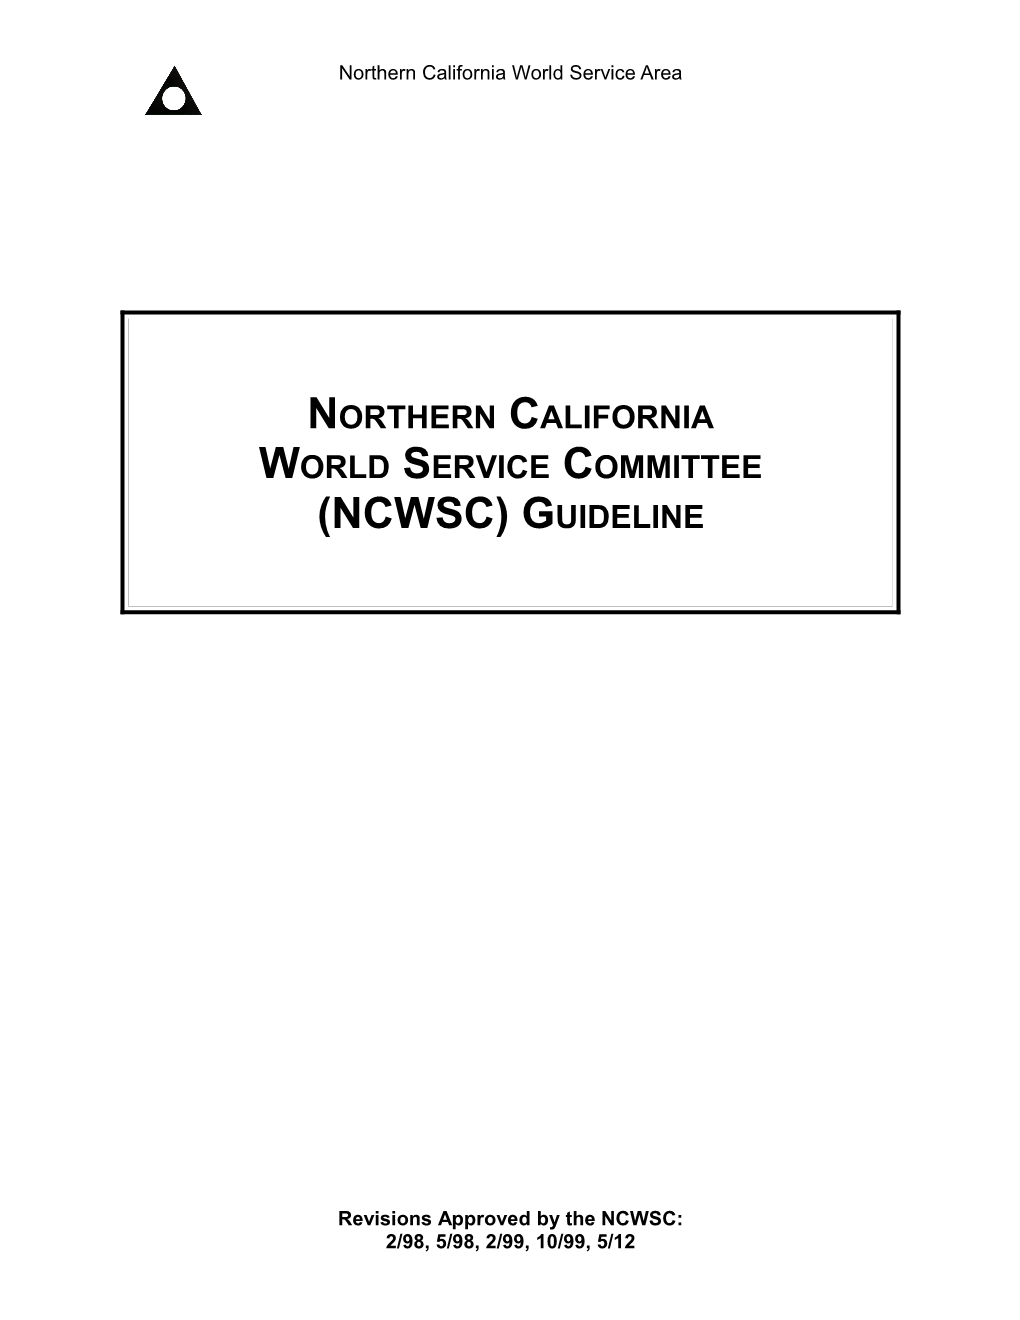 Northern California World Service Committee (NCWSC)